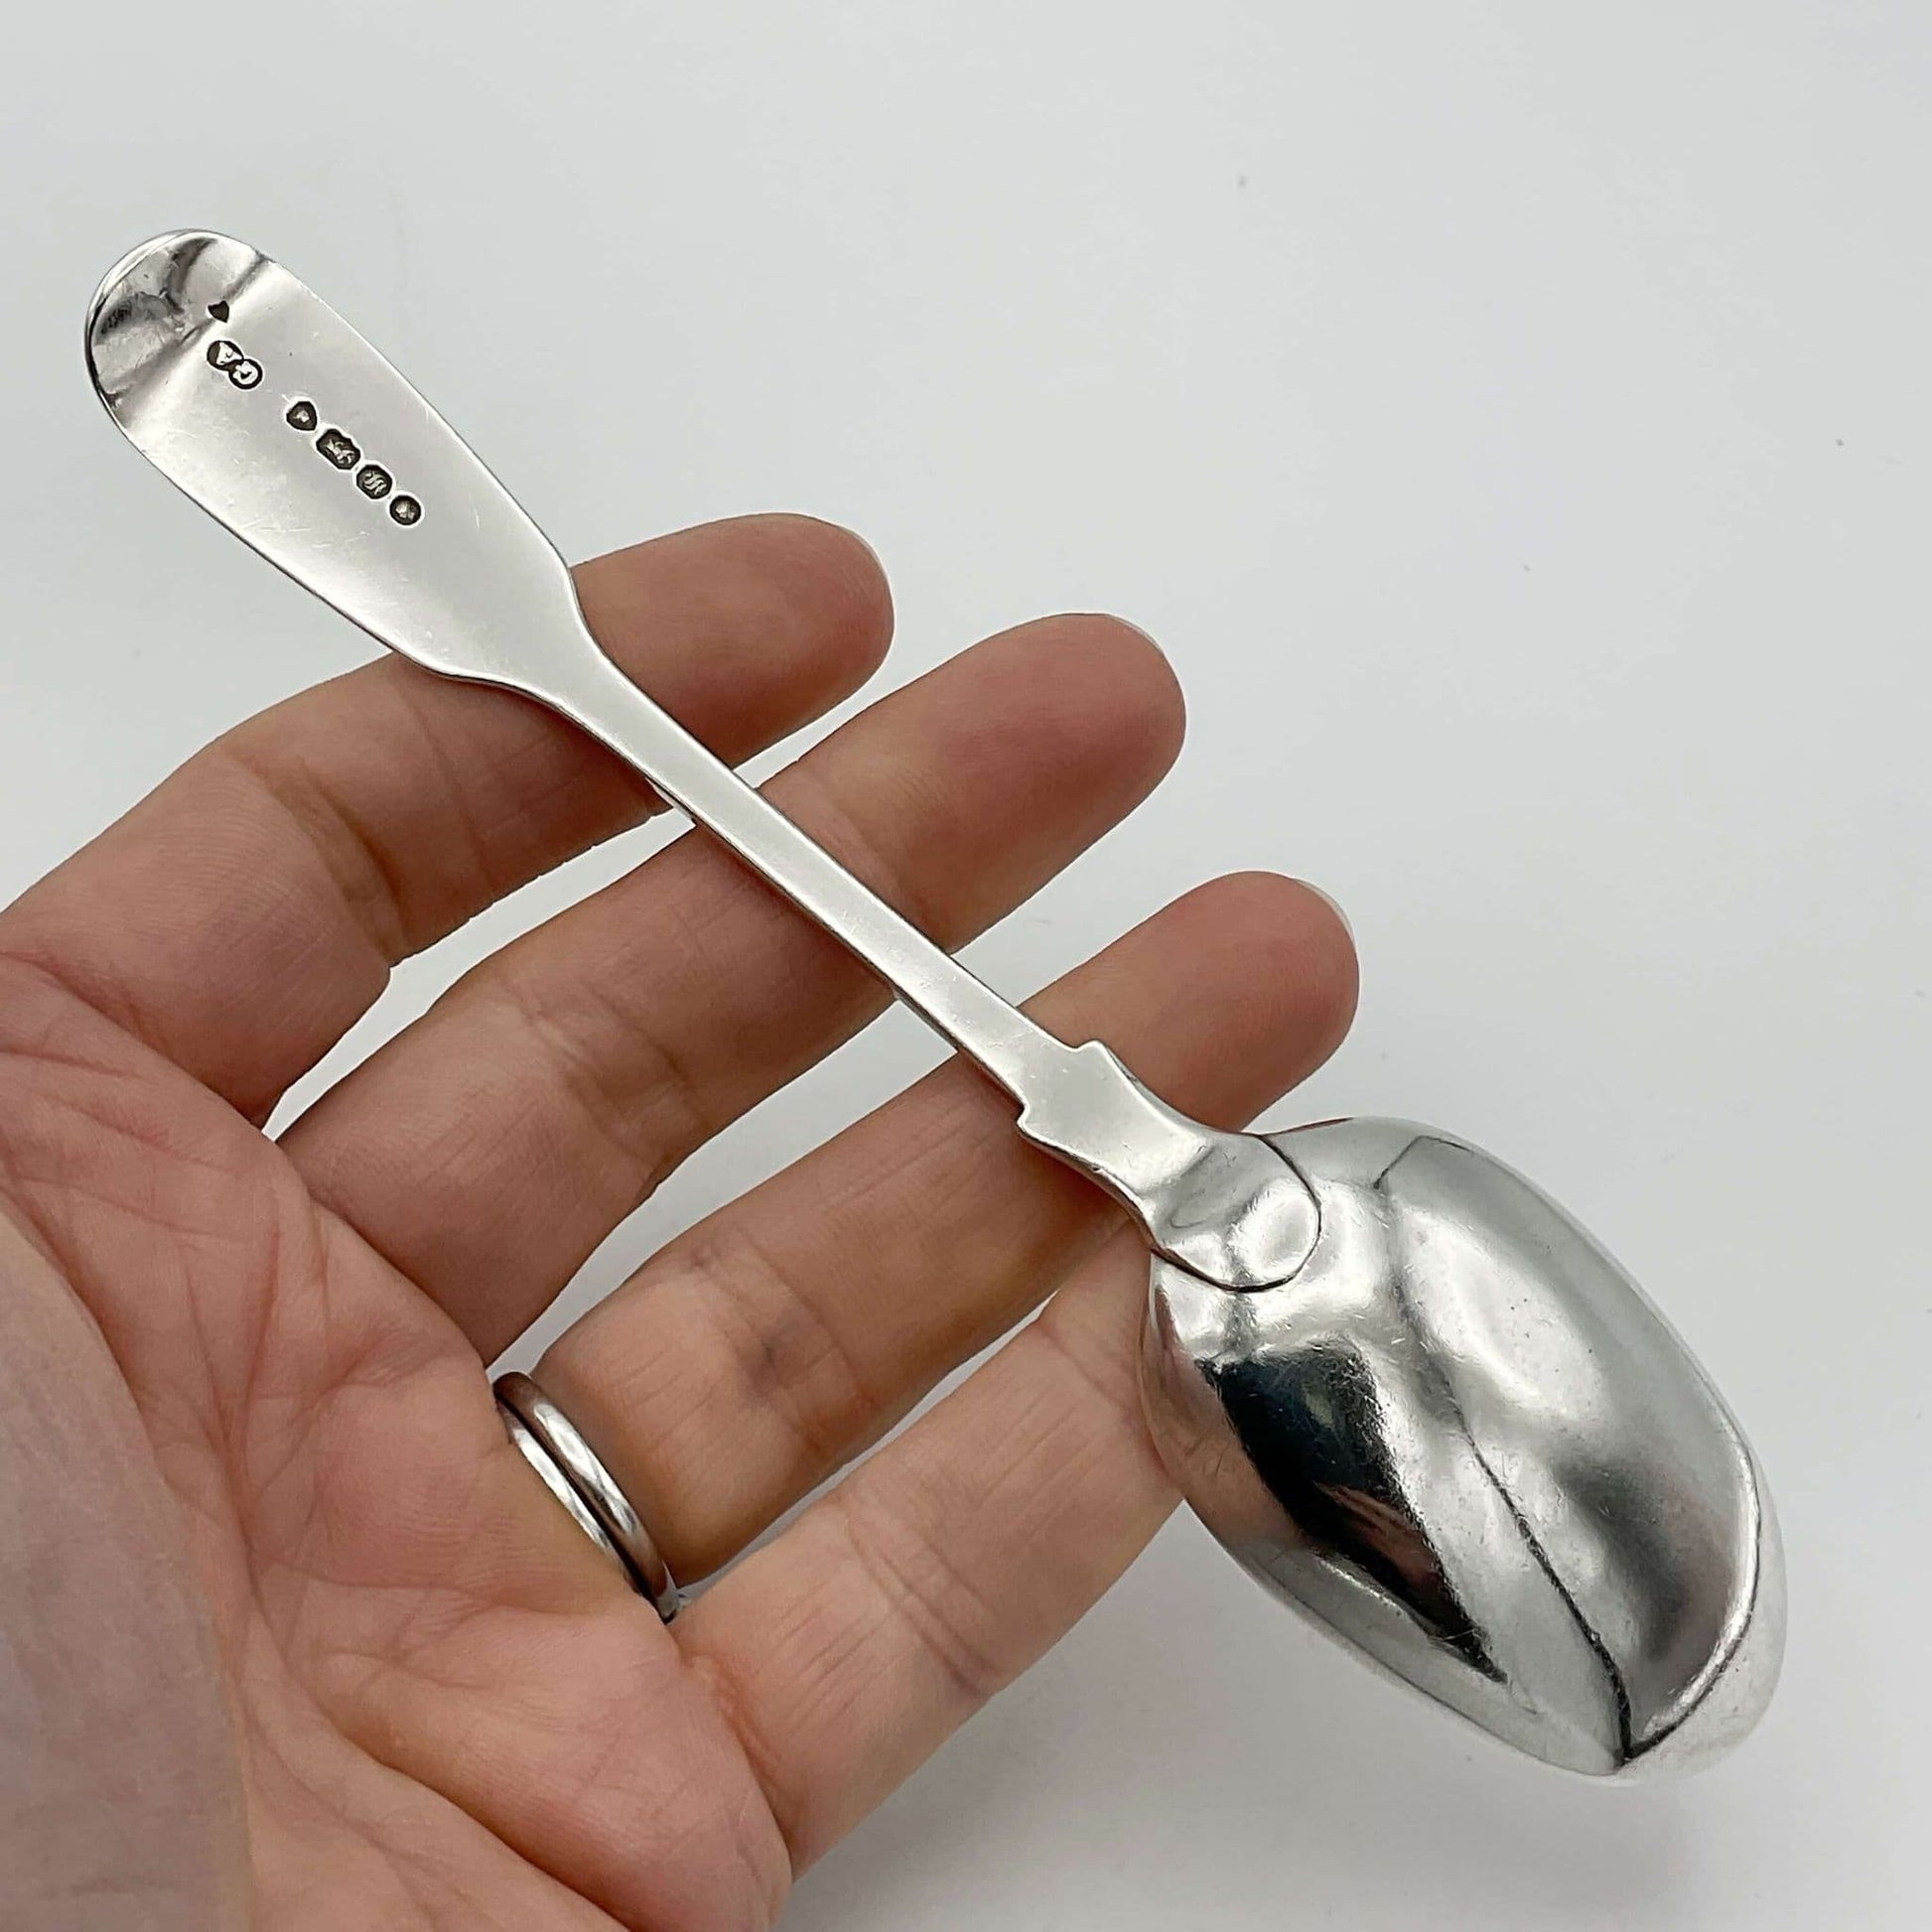 Antique silver teaspoon held upside down in a hand